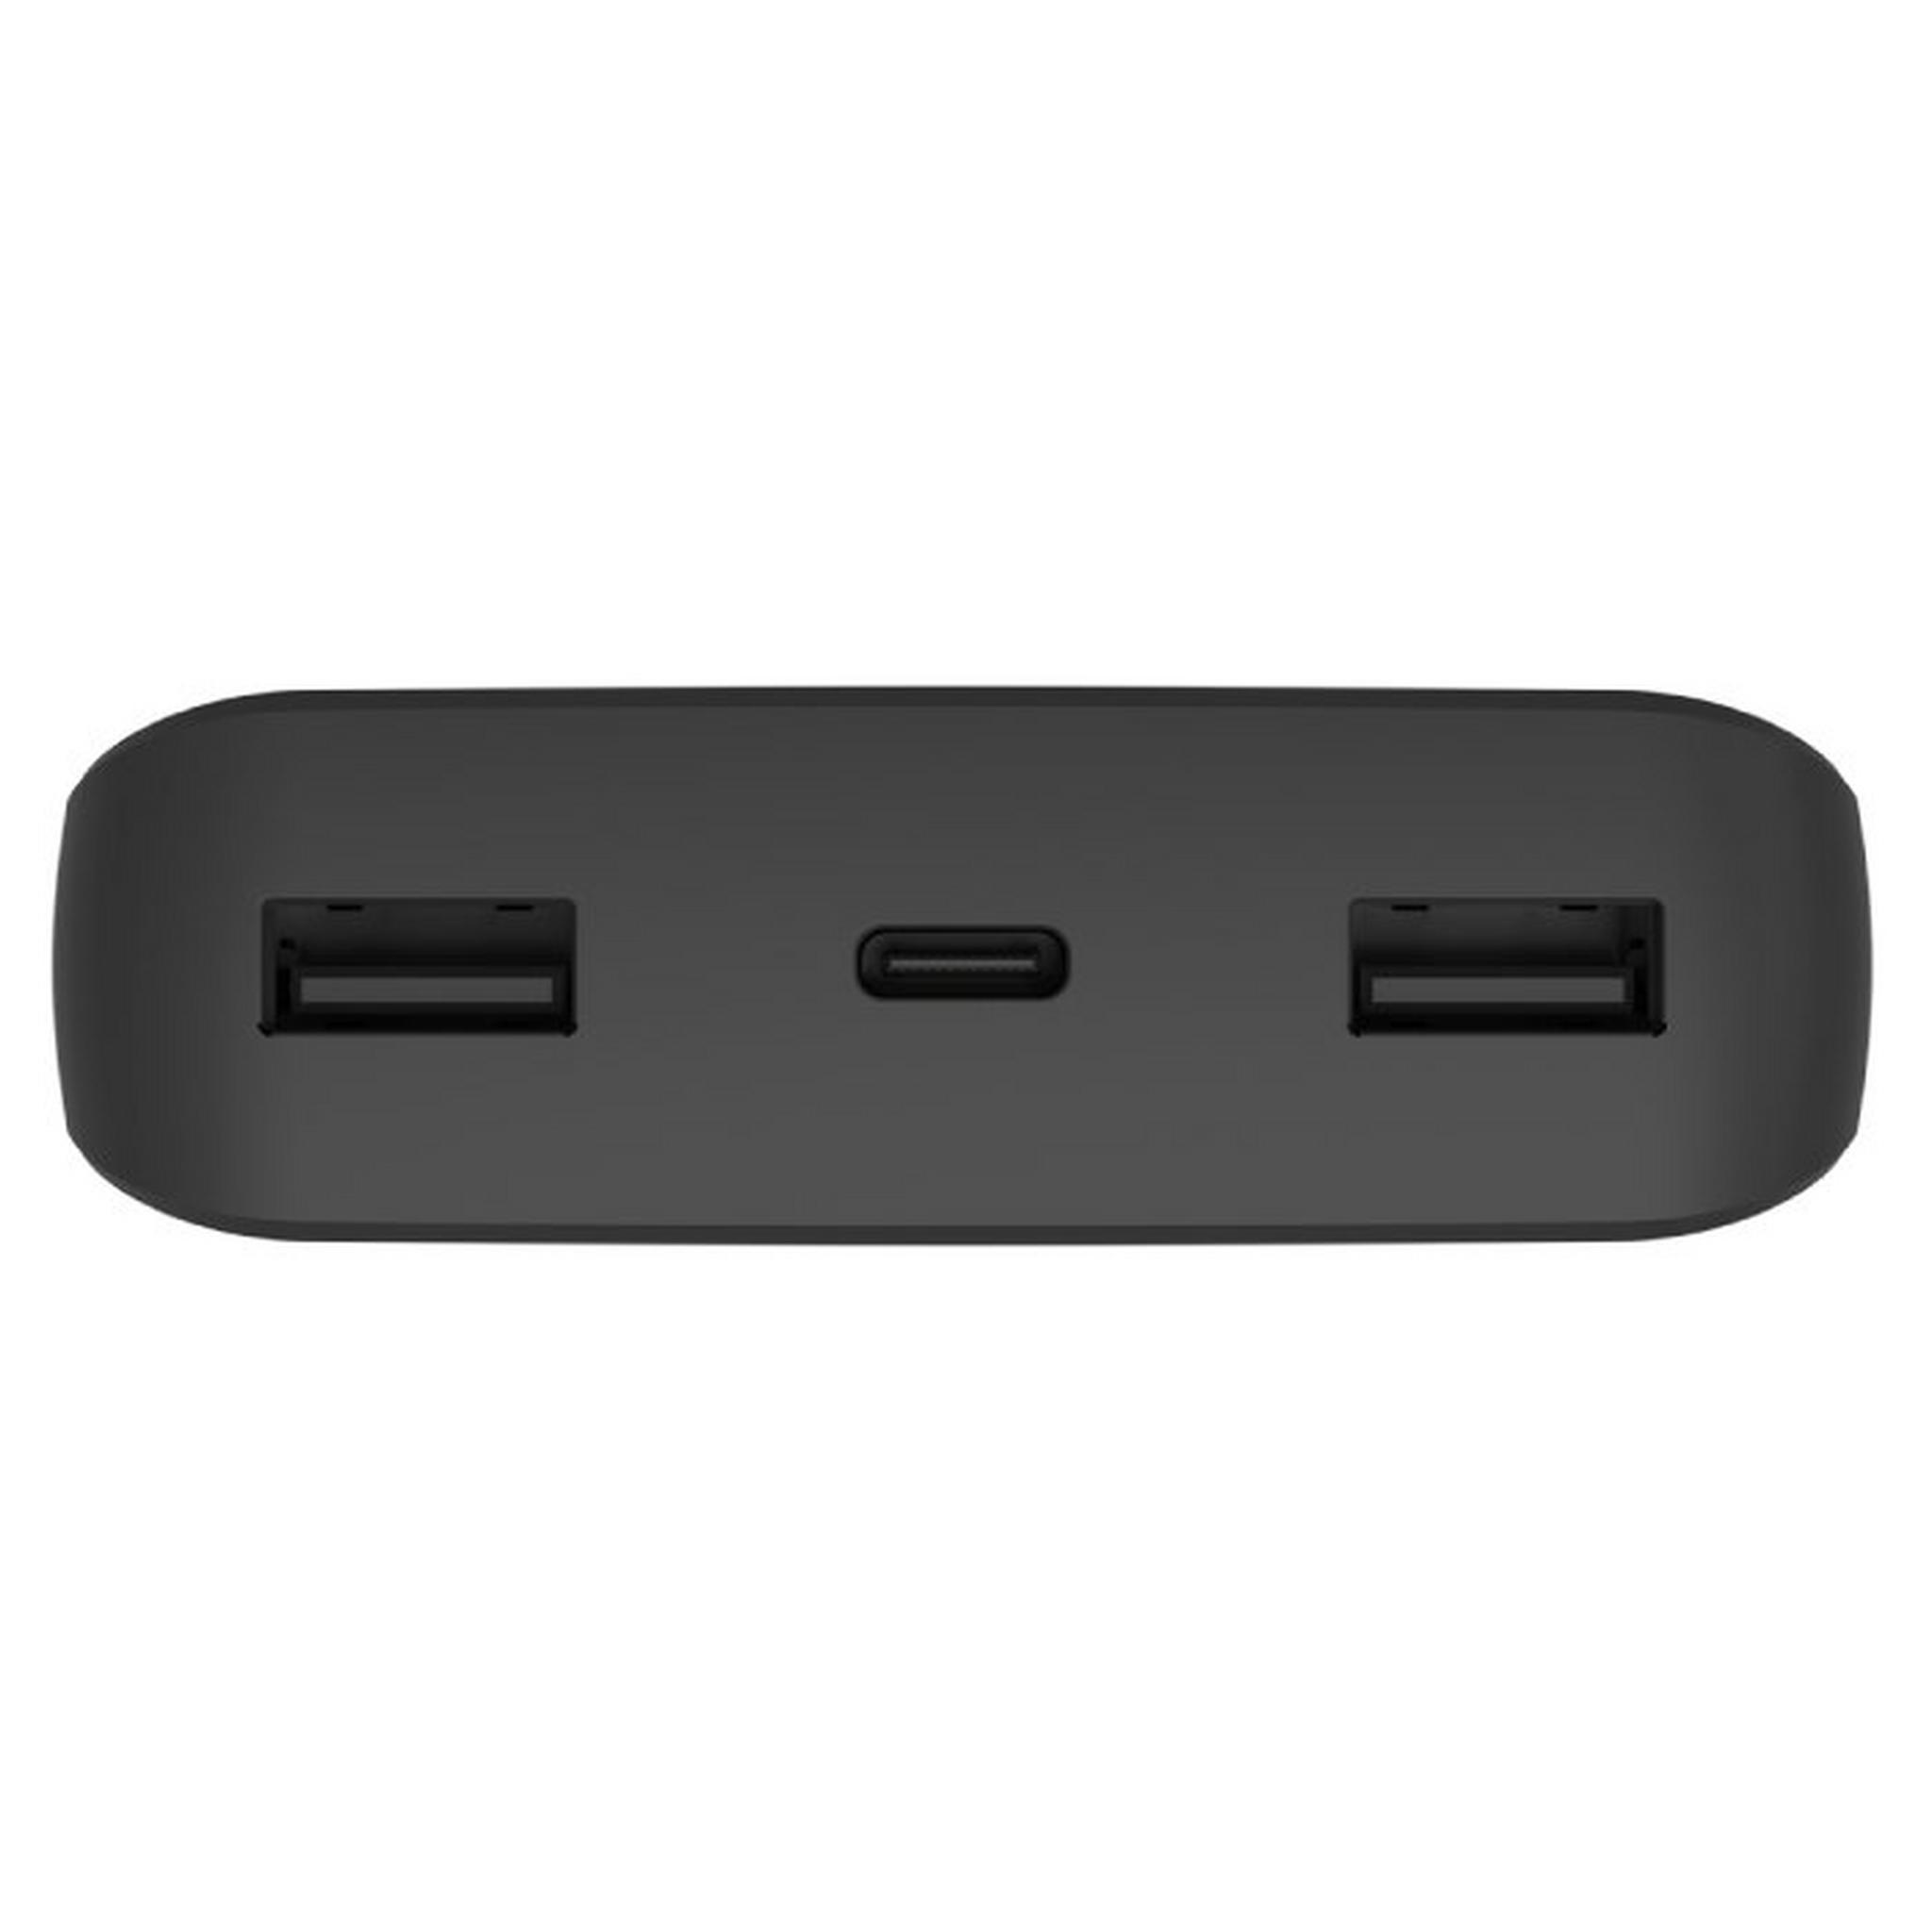 Mophie Essentials Powerstation Portable Battery, 20000 mAh, 401111853 – Black